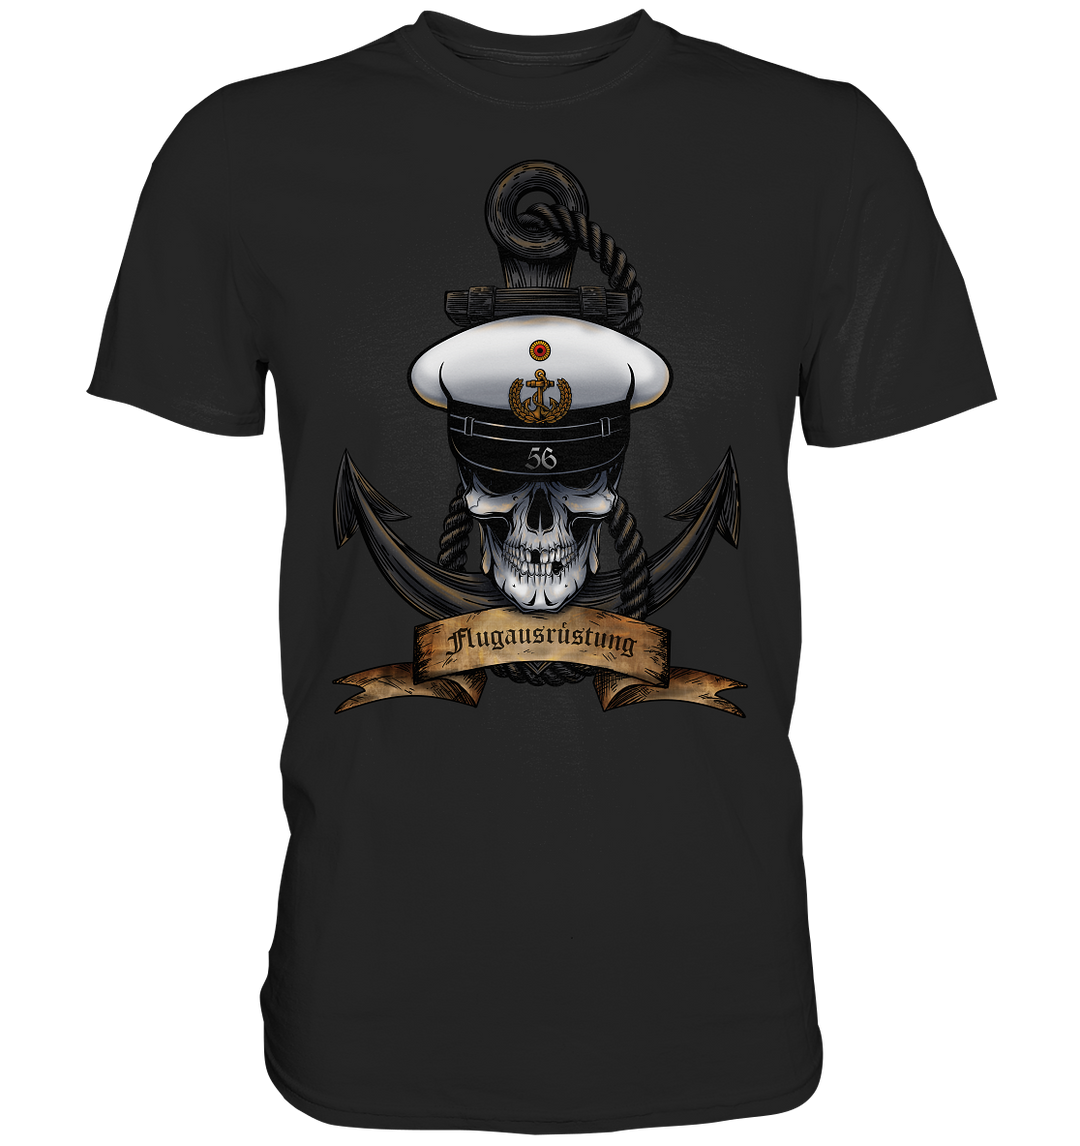 "Marine 56 - Flugausrüstung" - Premium Shirt